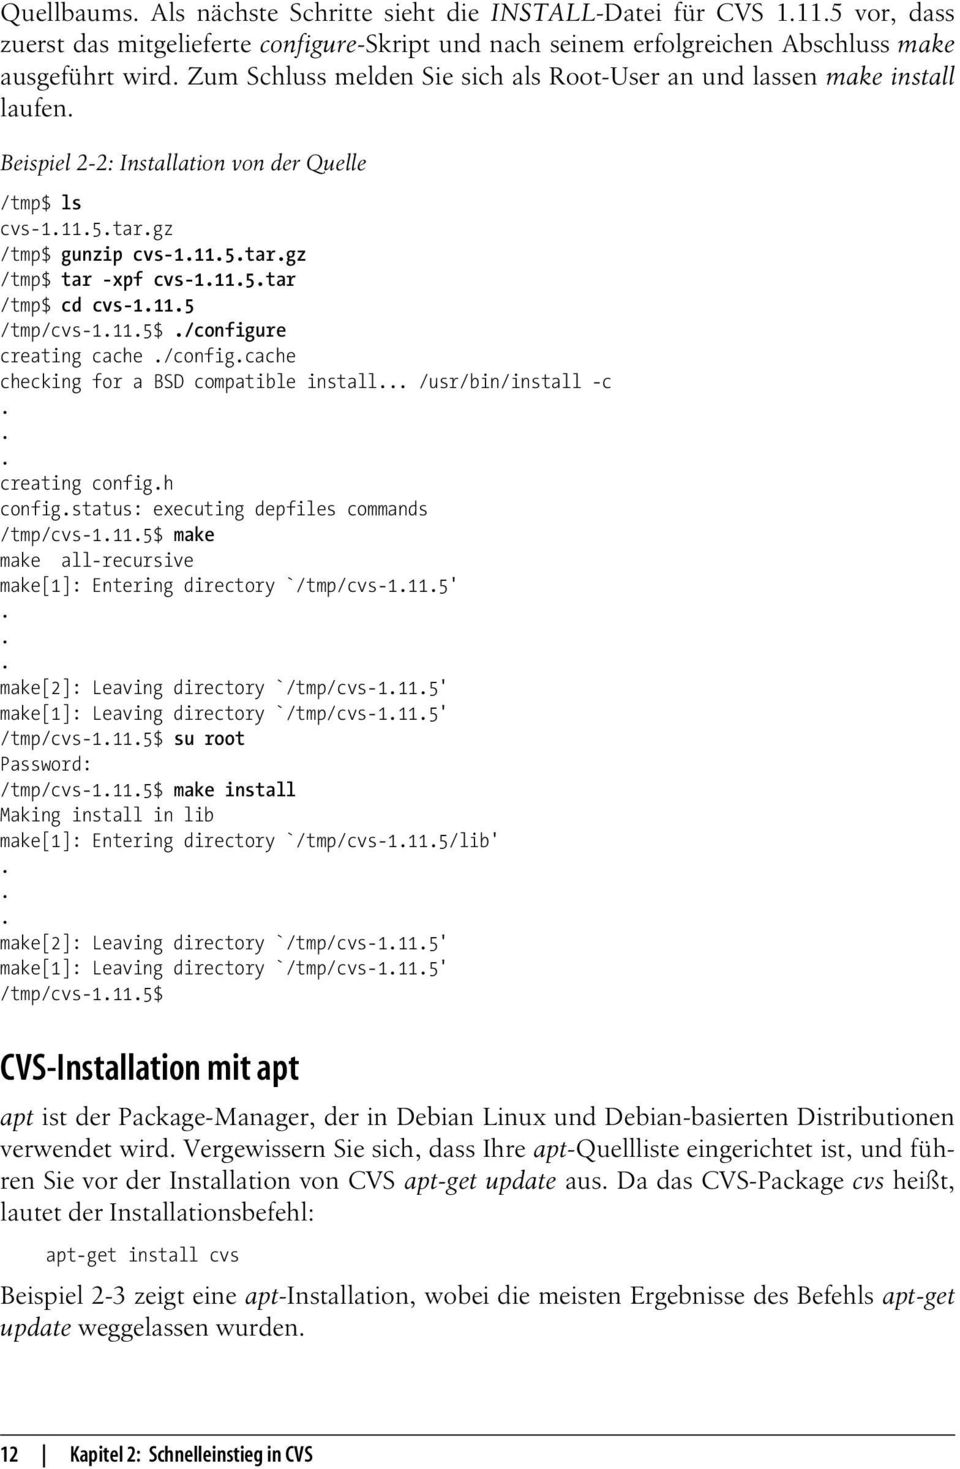 cvs-1115 /tmp/cvs-1115$ /configure creating cache /configcache checking for a BSD compatible install /usr/bin/install -c creating configh configstatus: executing depfiles commands /tmp/cvs-1115$ make